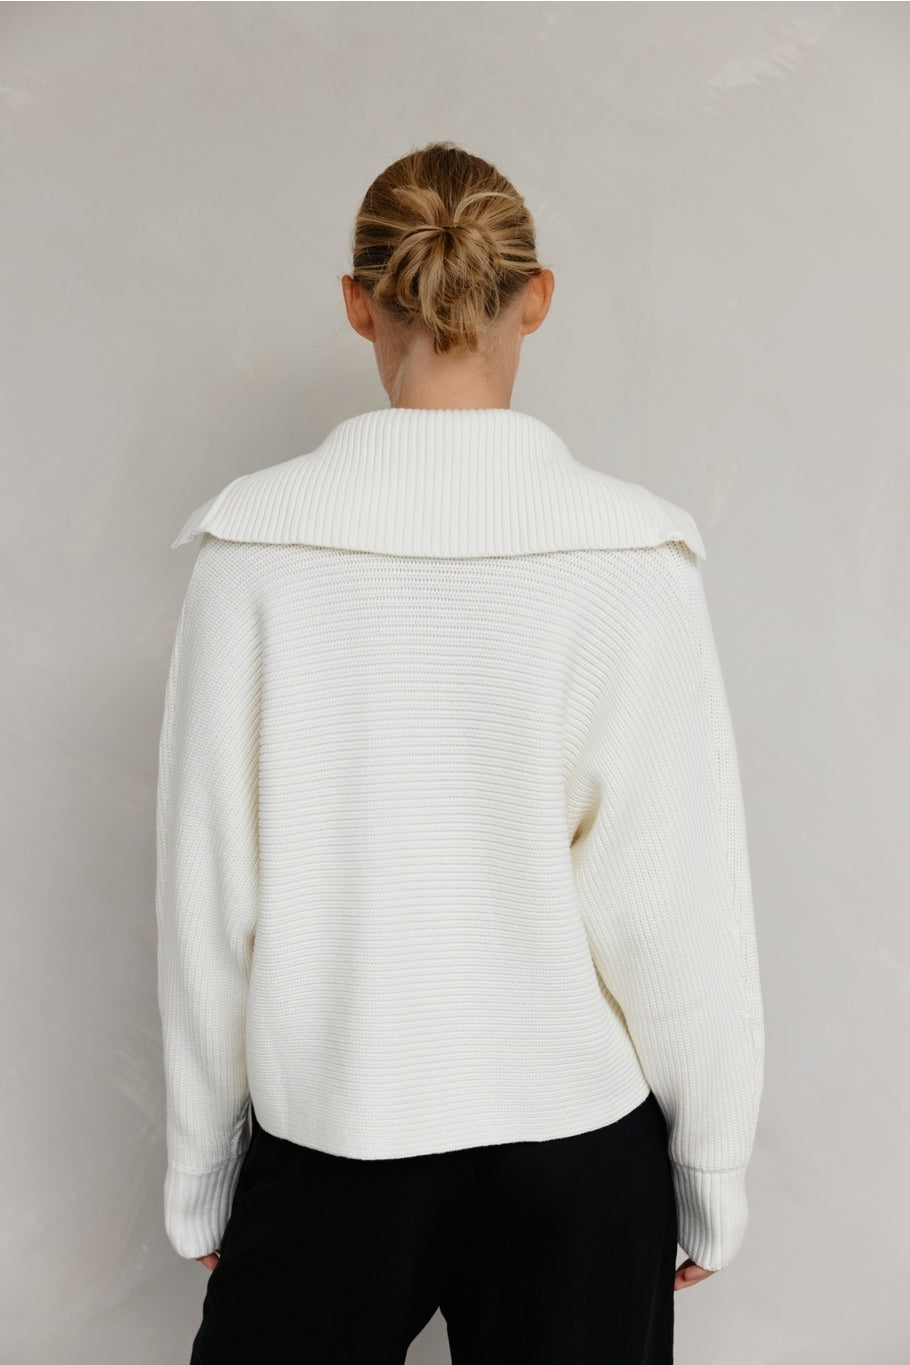 The Brixley Sweater